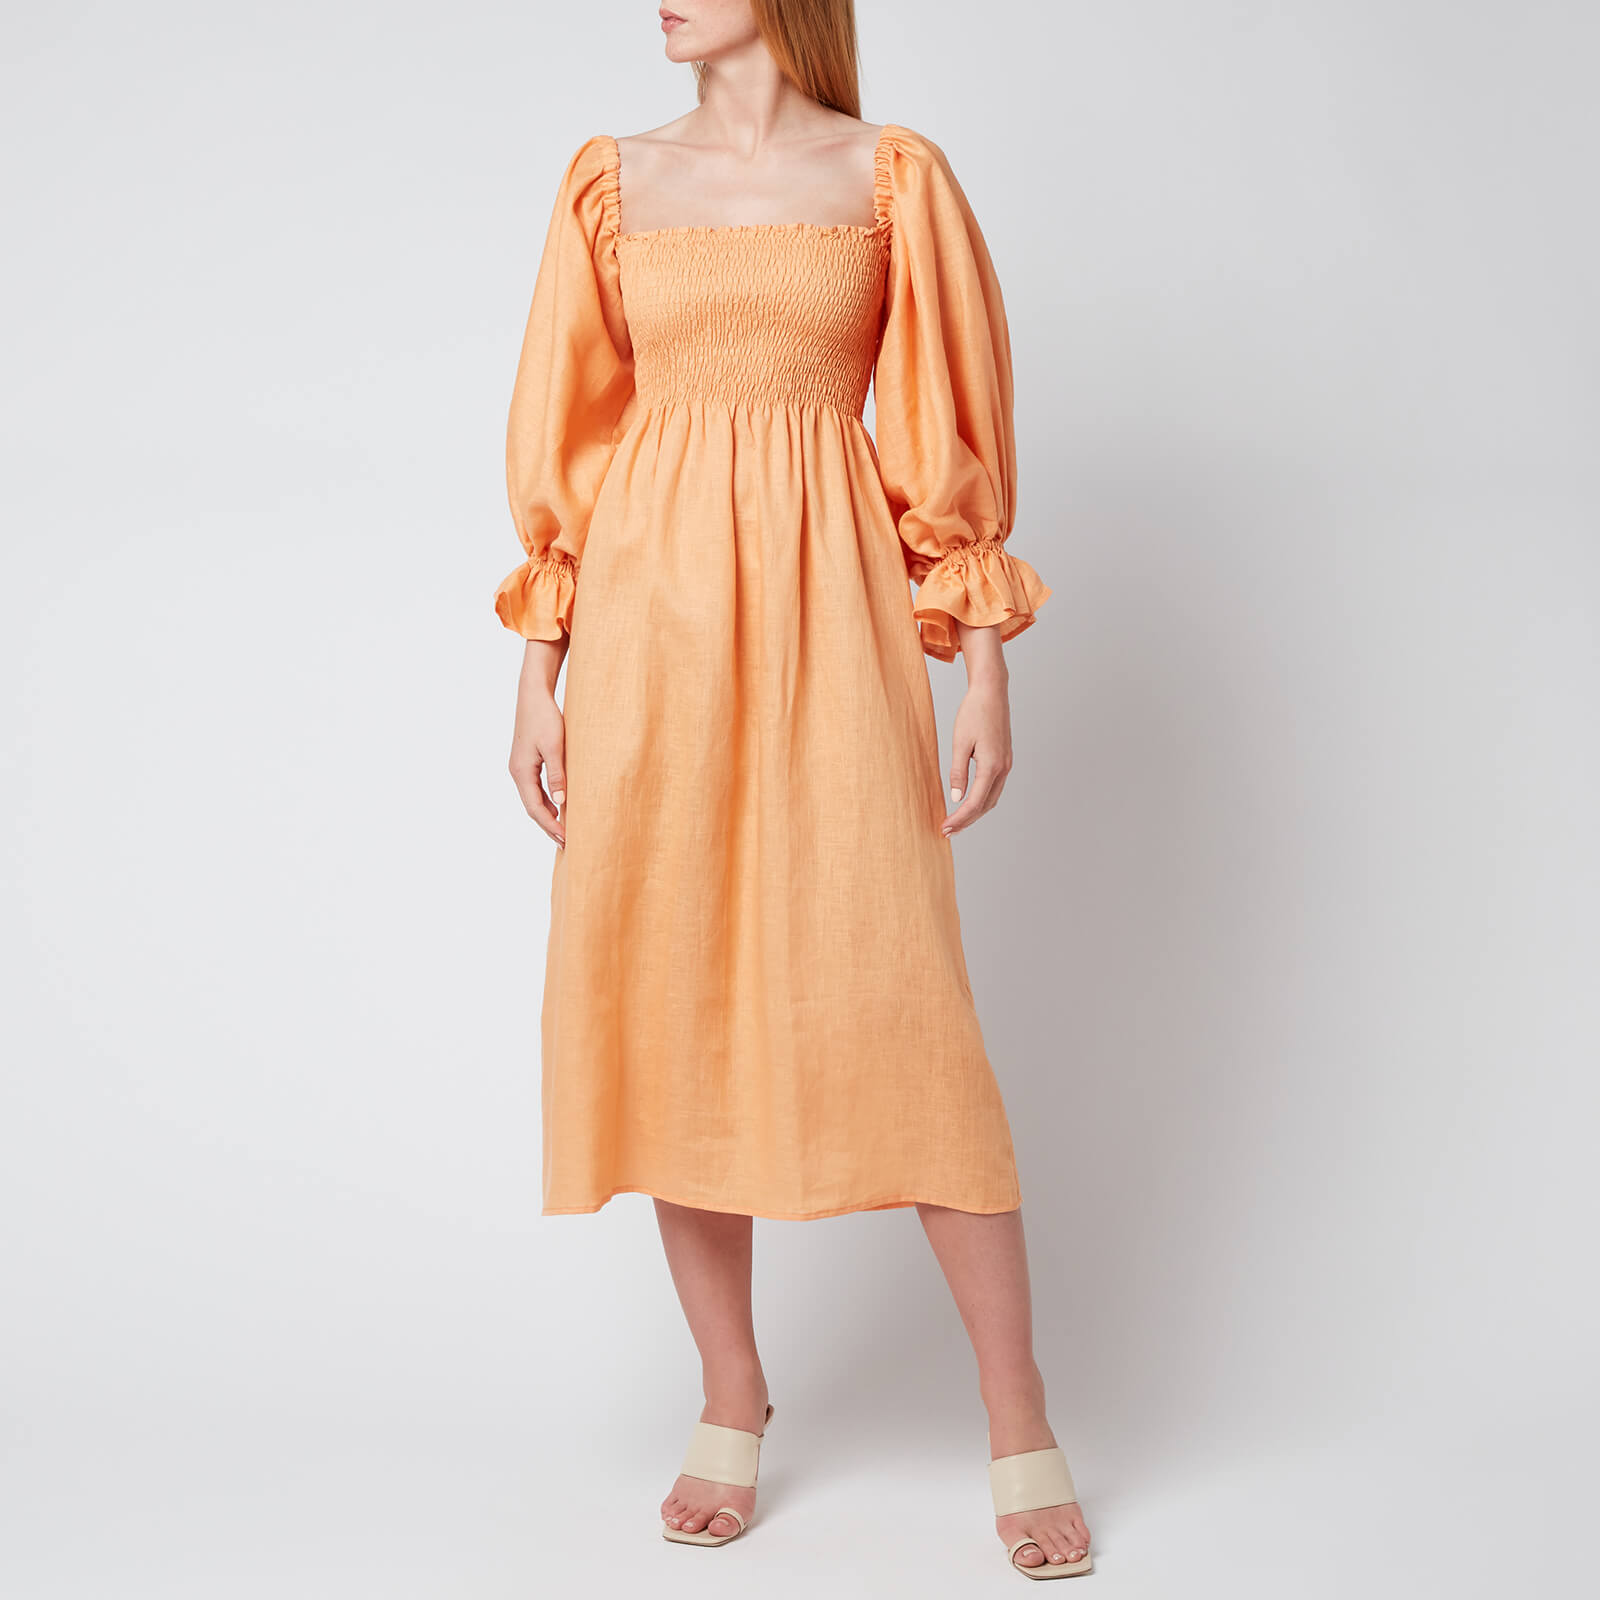 Sleeper Women's Atlanta Linen Dress - Coral - M